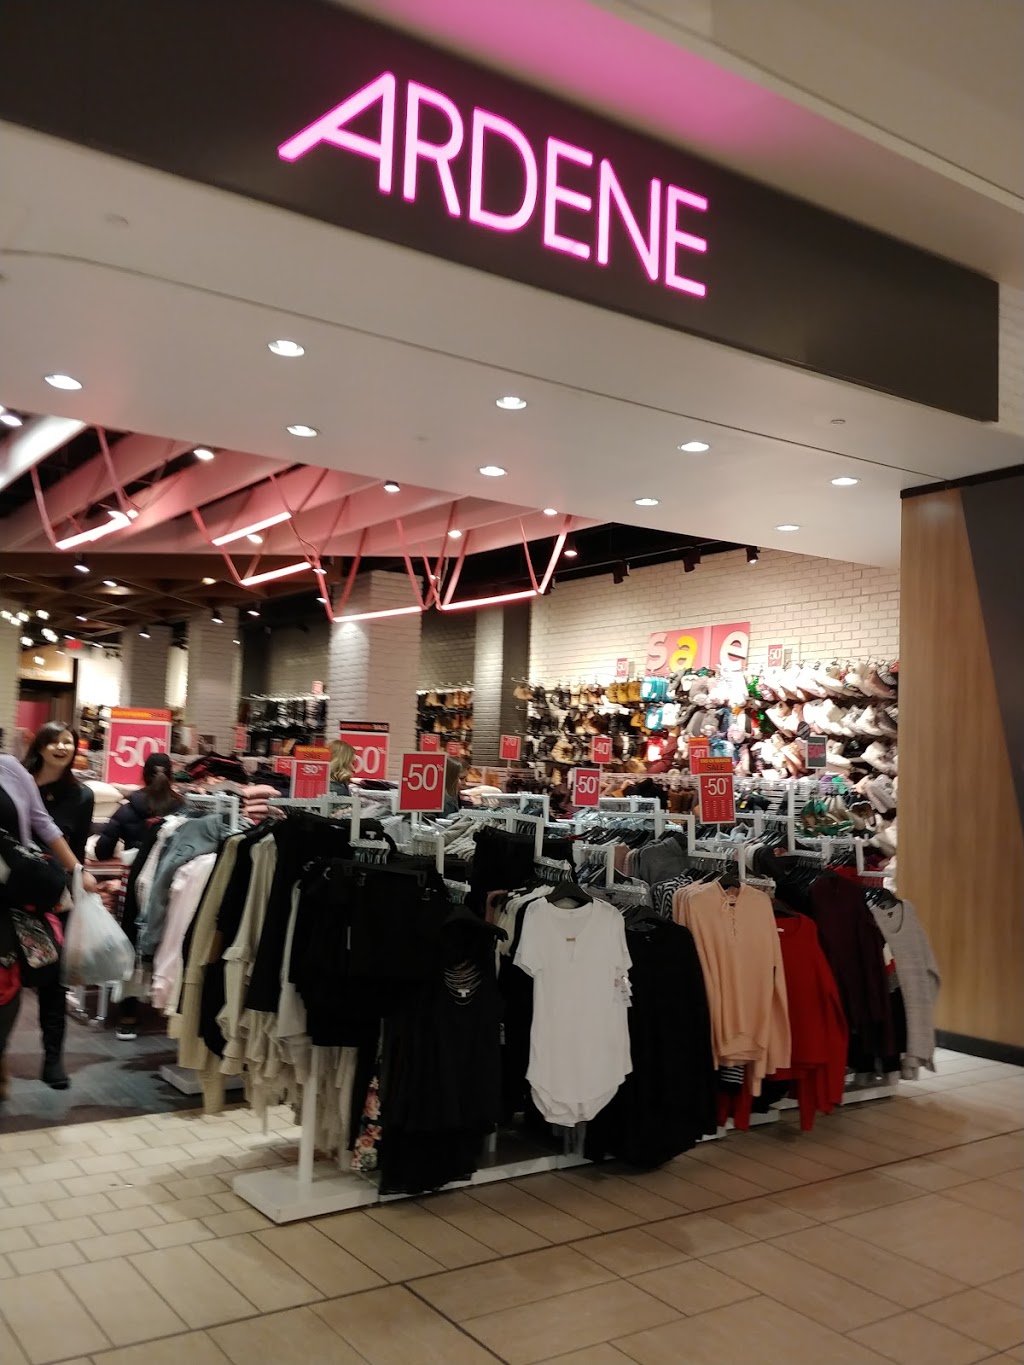 Ardene | clothing store | 6455 Macleod Trail SW, Calgary, AB T2H 0K9, Canada | 4034516344 OR +1 403-451-6344